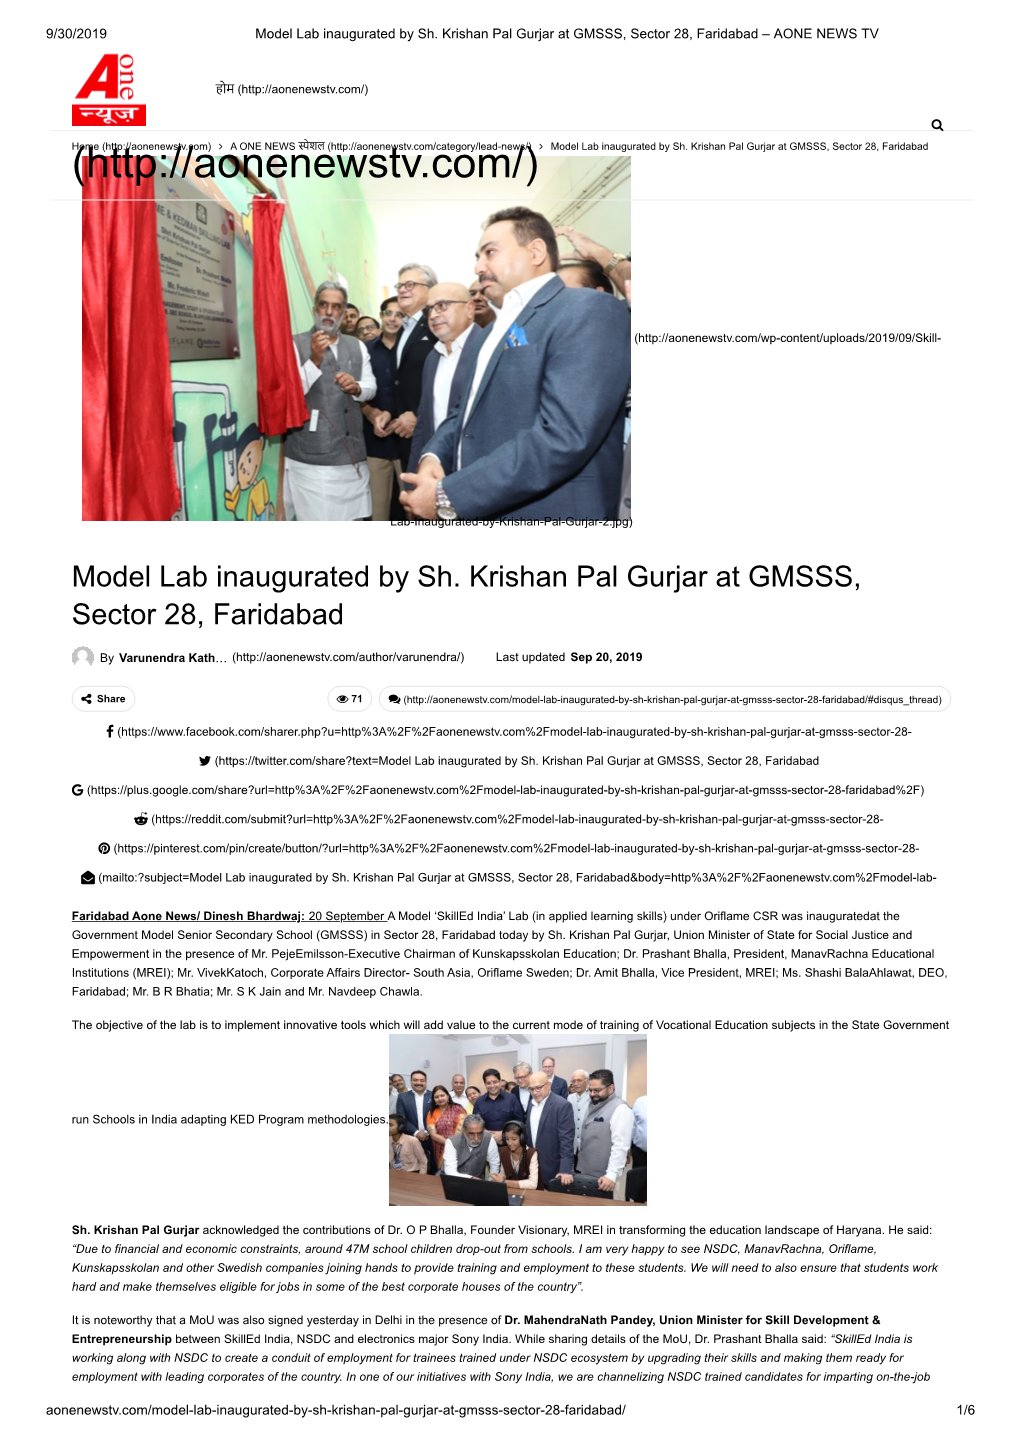 Model Lab Inaugurated by Sh. Krishan Pal Gurjar at GMSSS, Sector 28, Faridabad – AONE NEWS TV